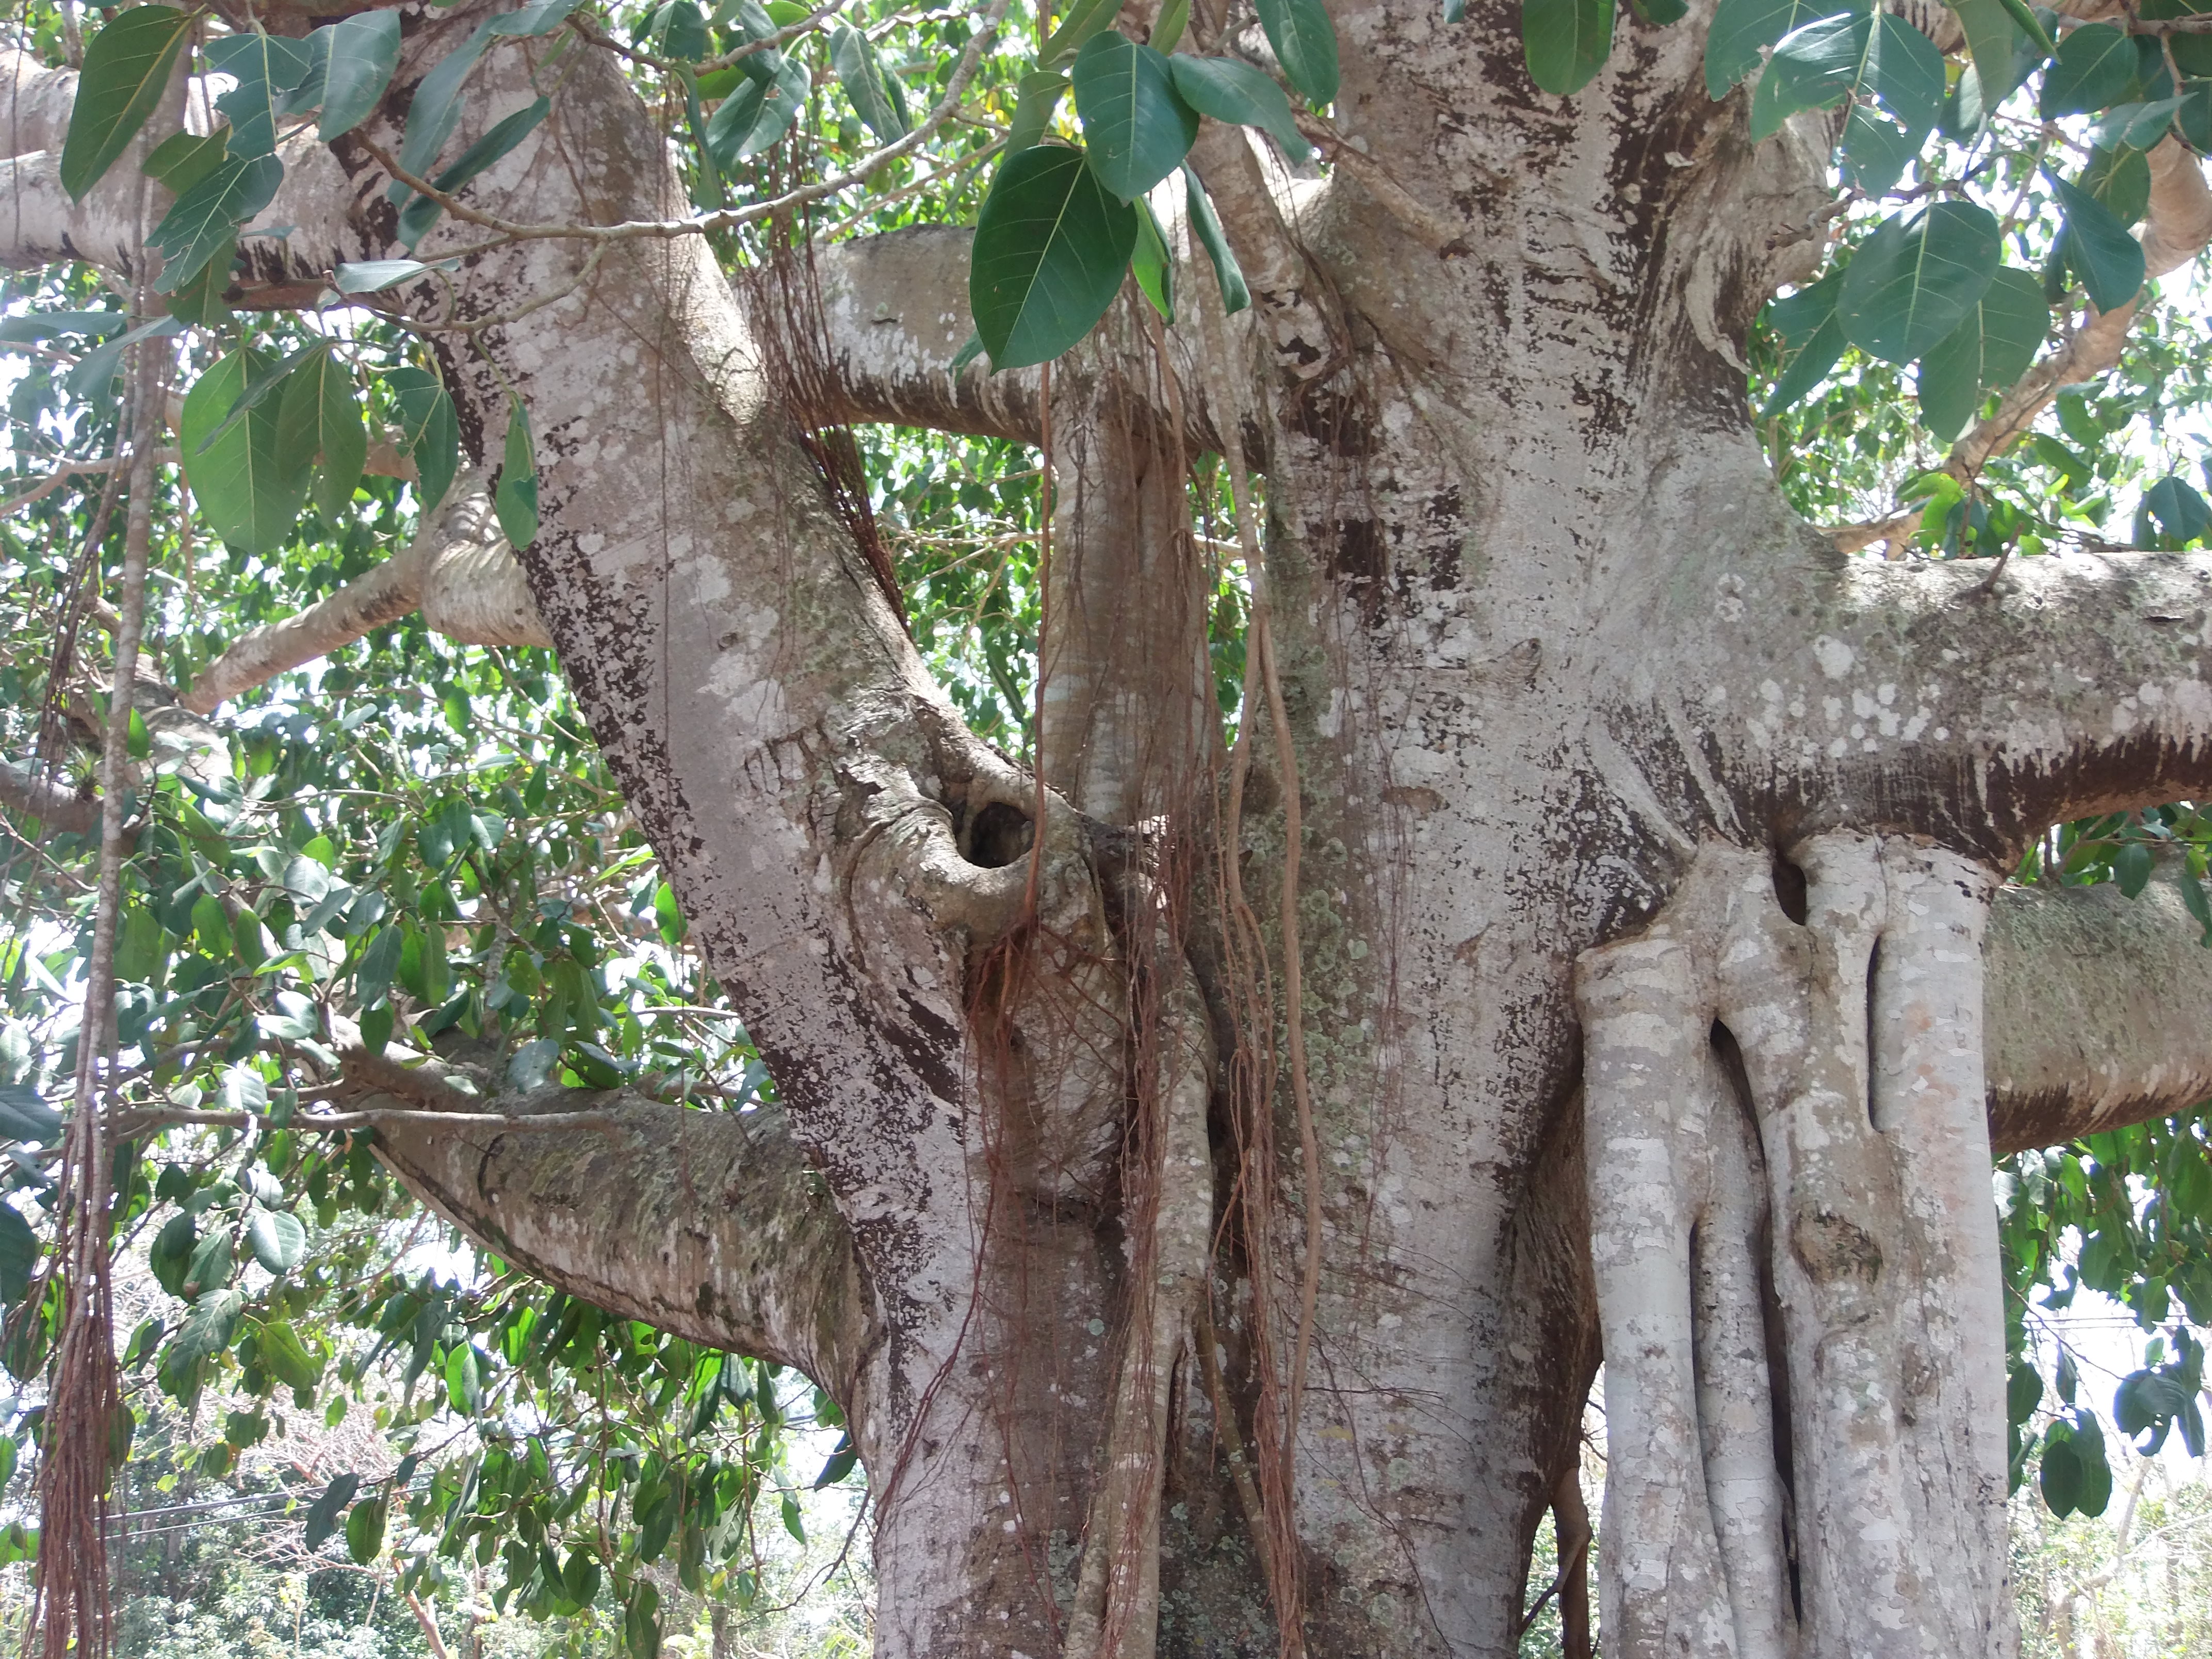 Lianen an einem Baum in Kuba